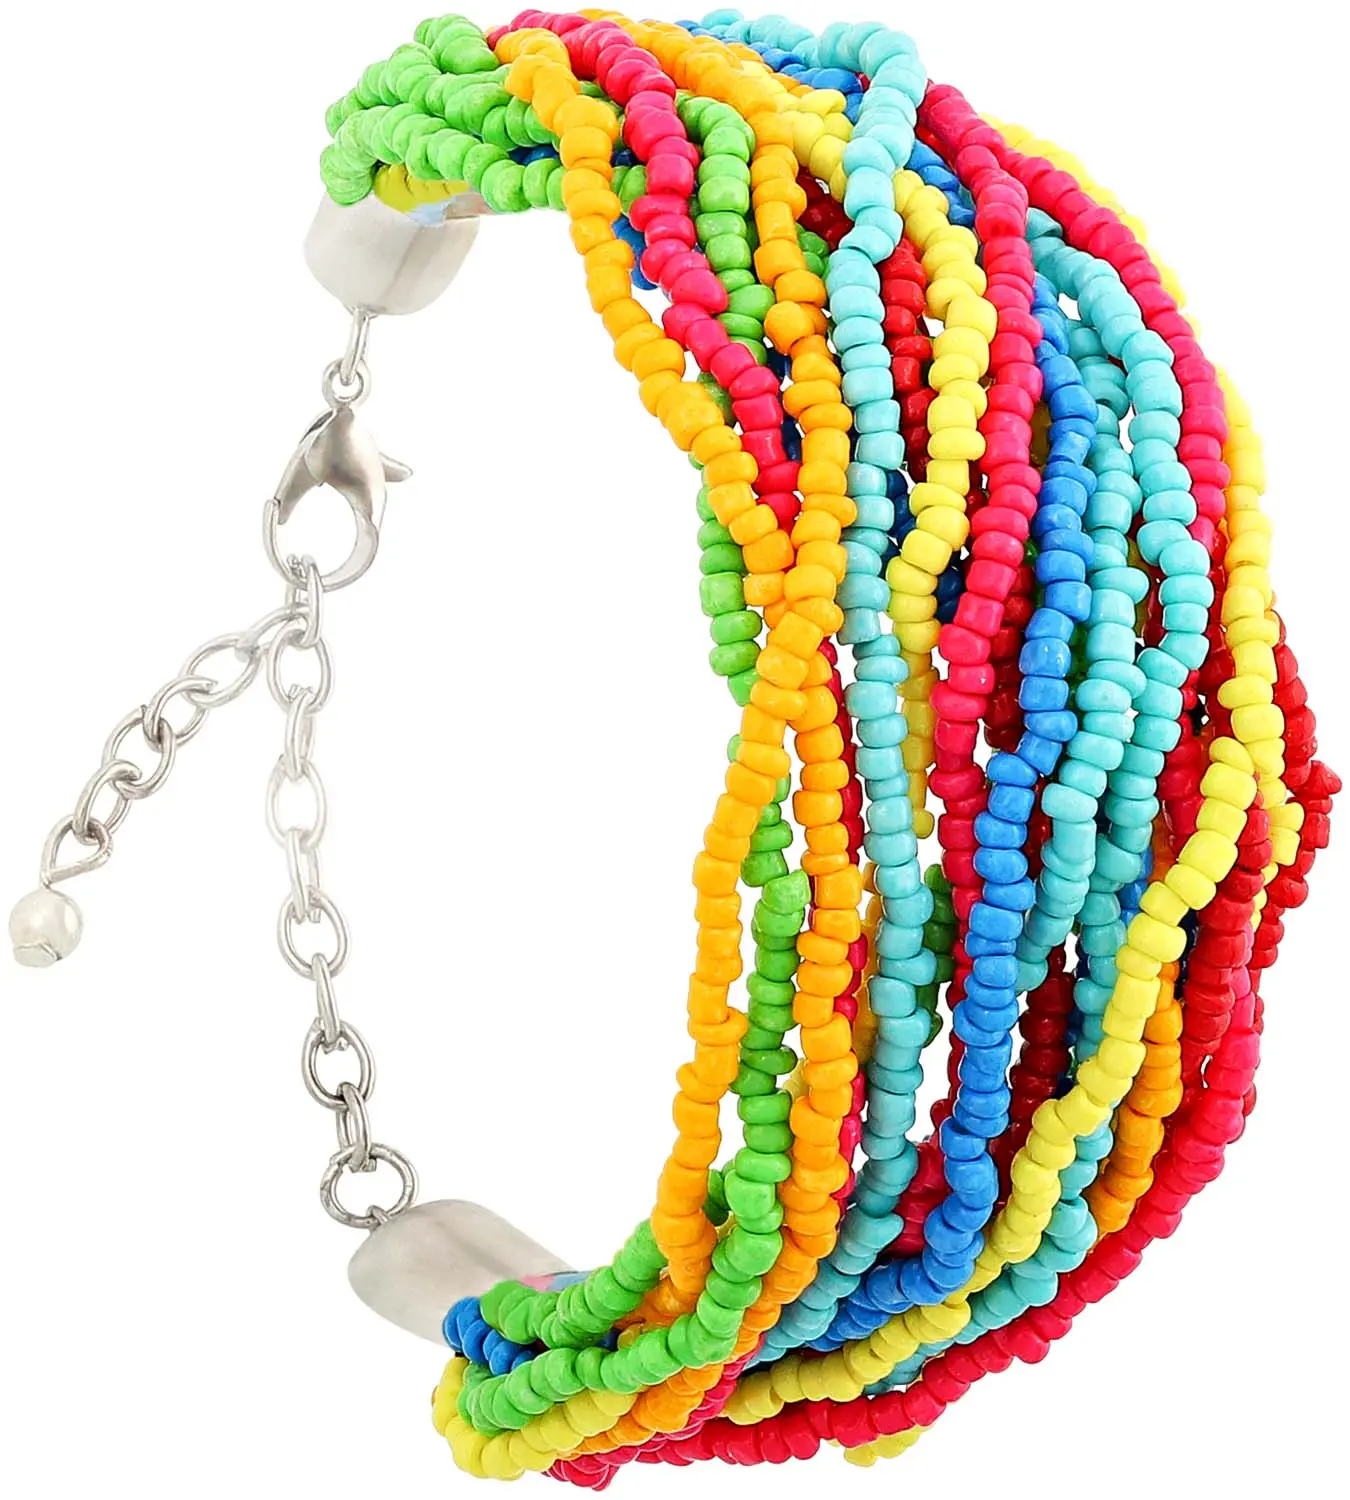 Bracelet - Multicolored Beads